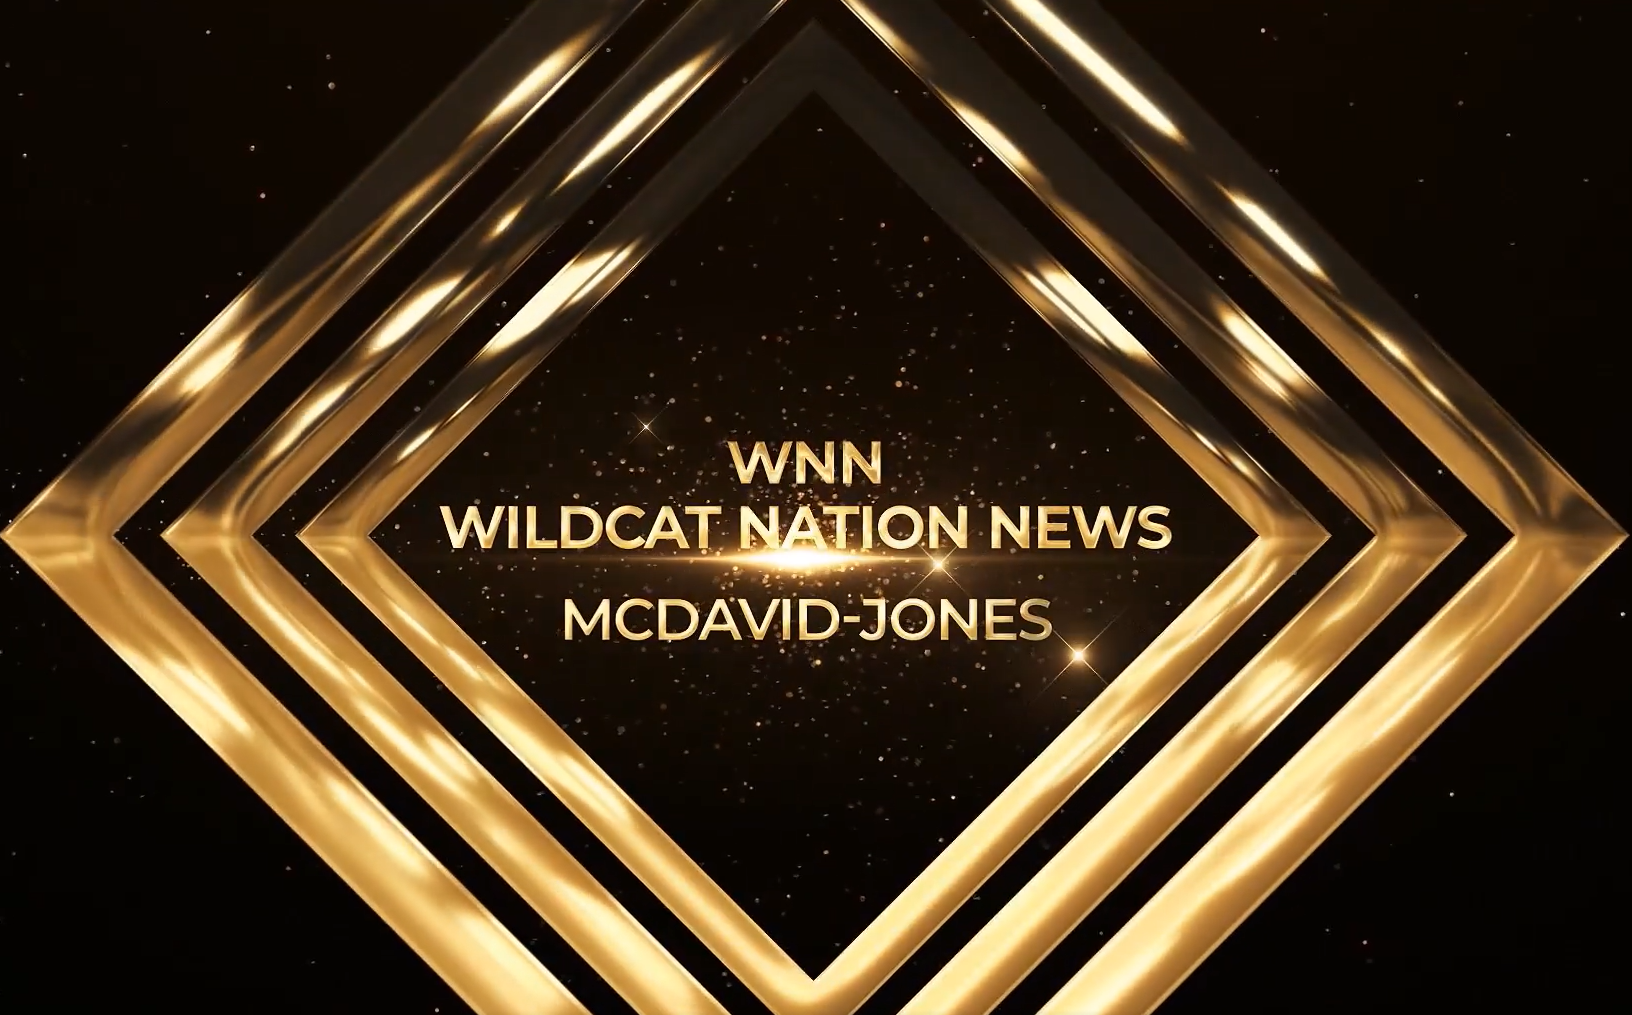 WNN Wildcat Nation News Wins 2020 Film Festival News Category